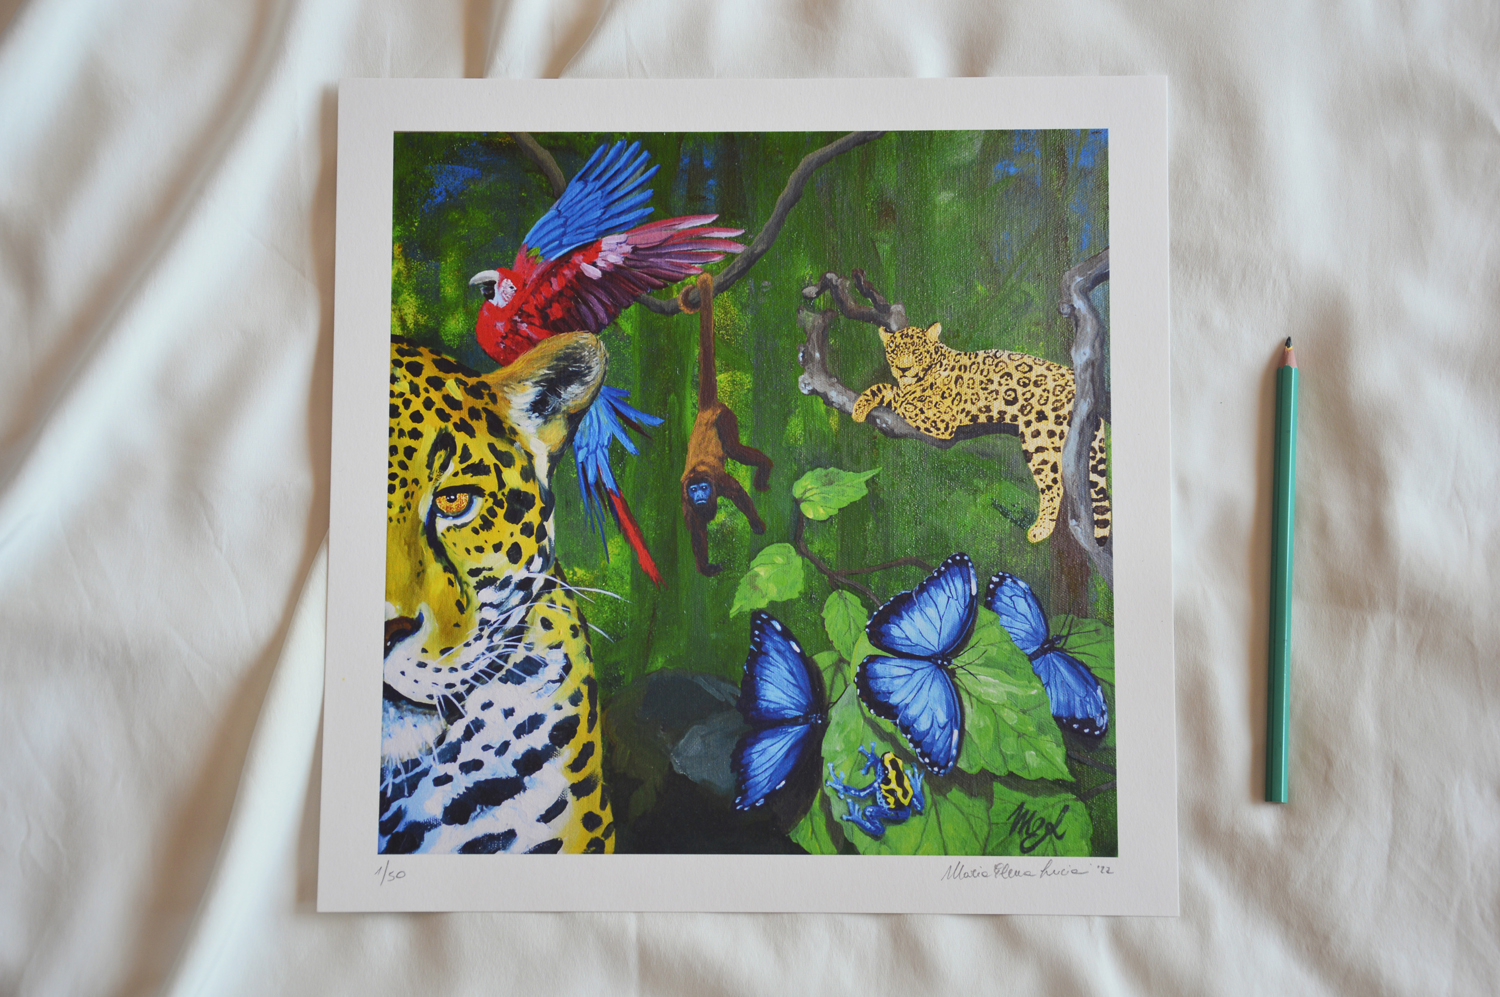 Amazonian Forest, art print